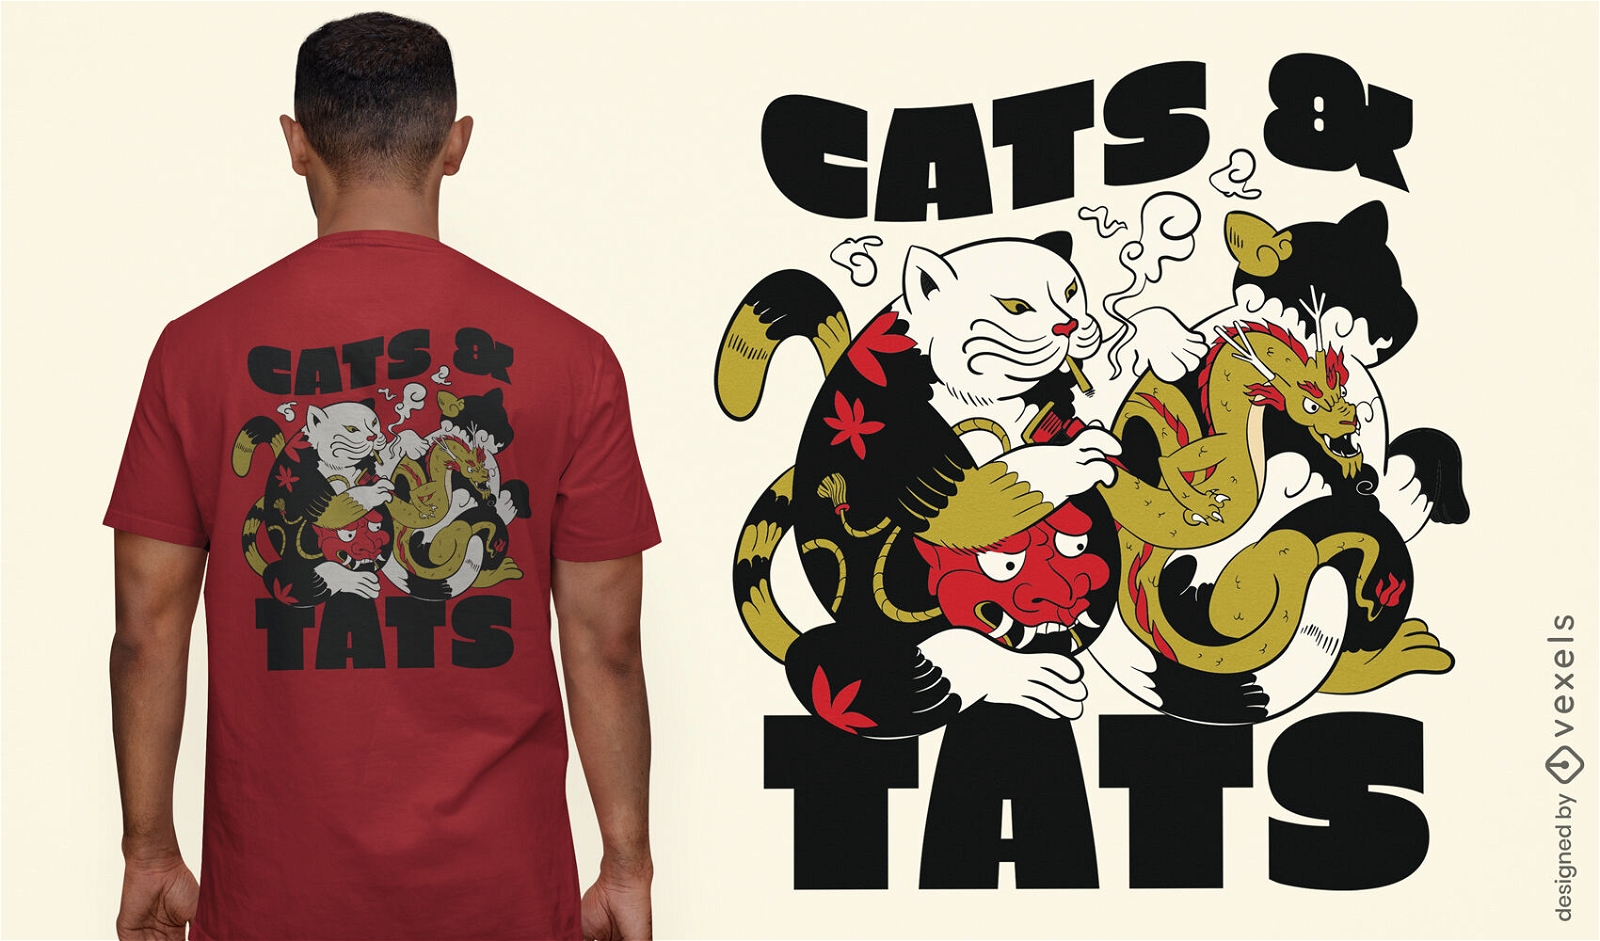 Cat tattoo artist animal t-shirt design